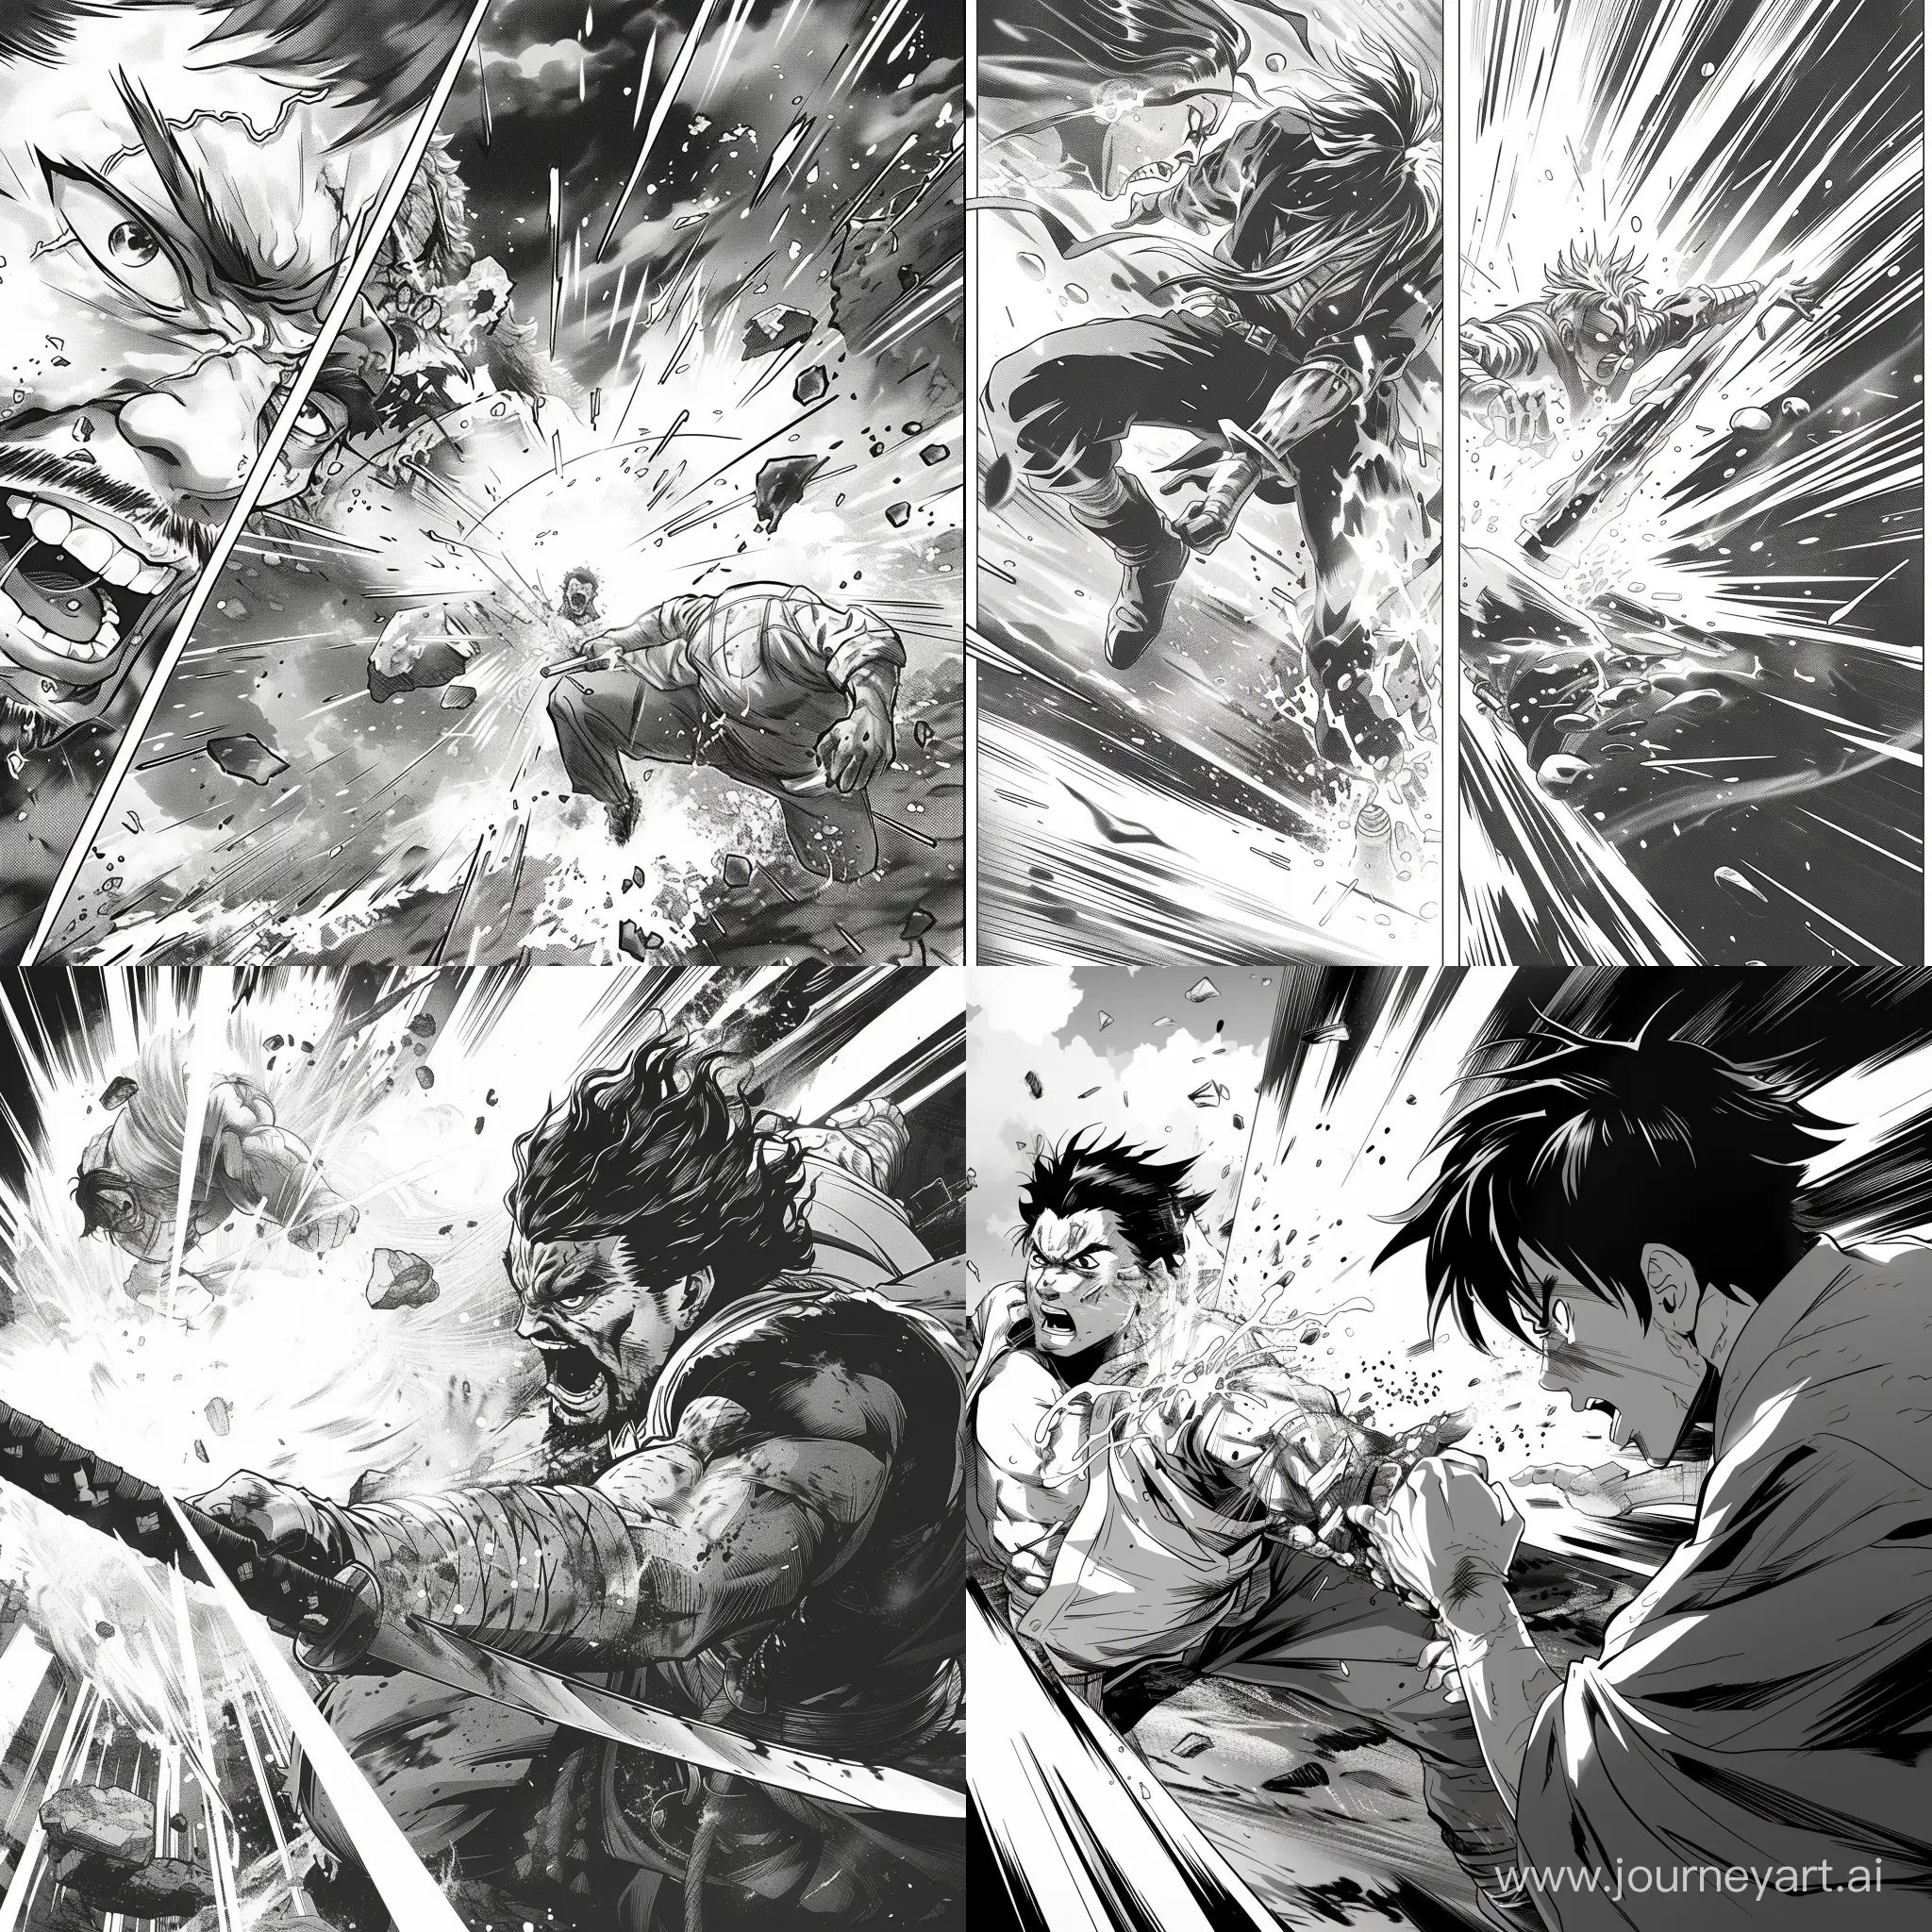 Epic-Manga-Panel-Dynamic-Battle-Scene